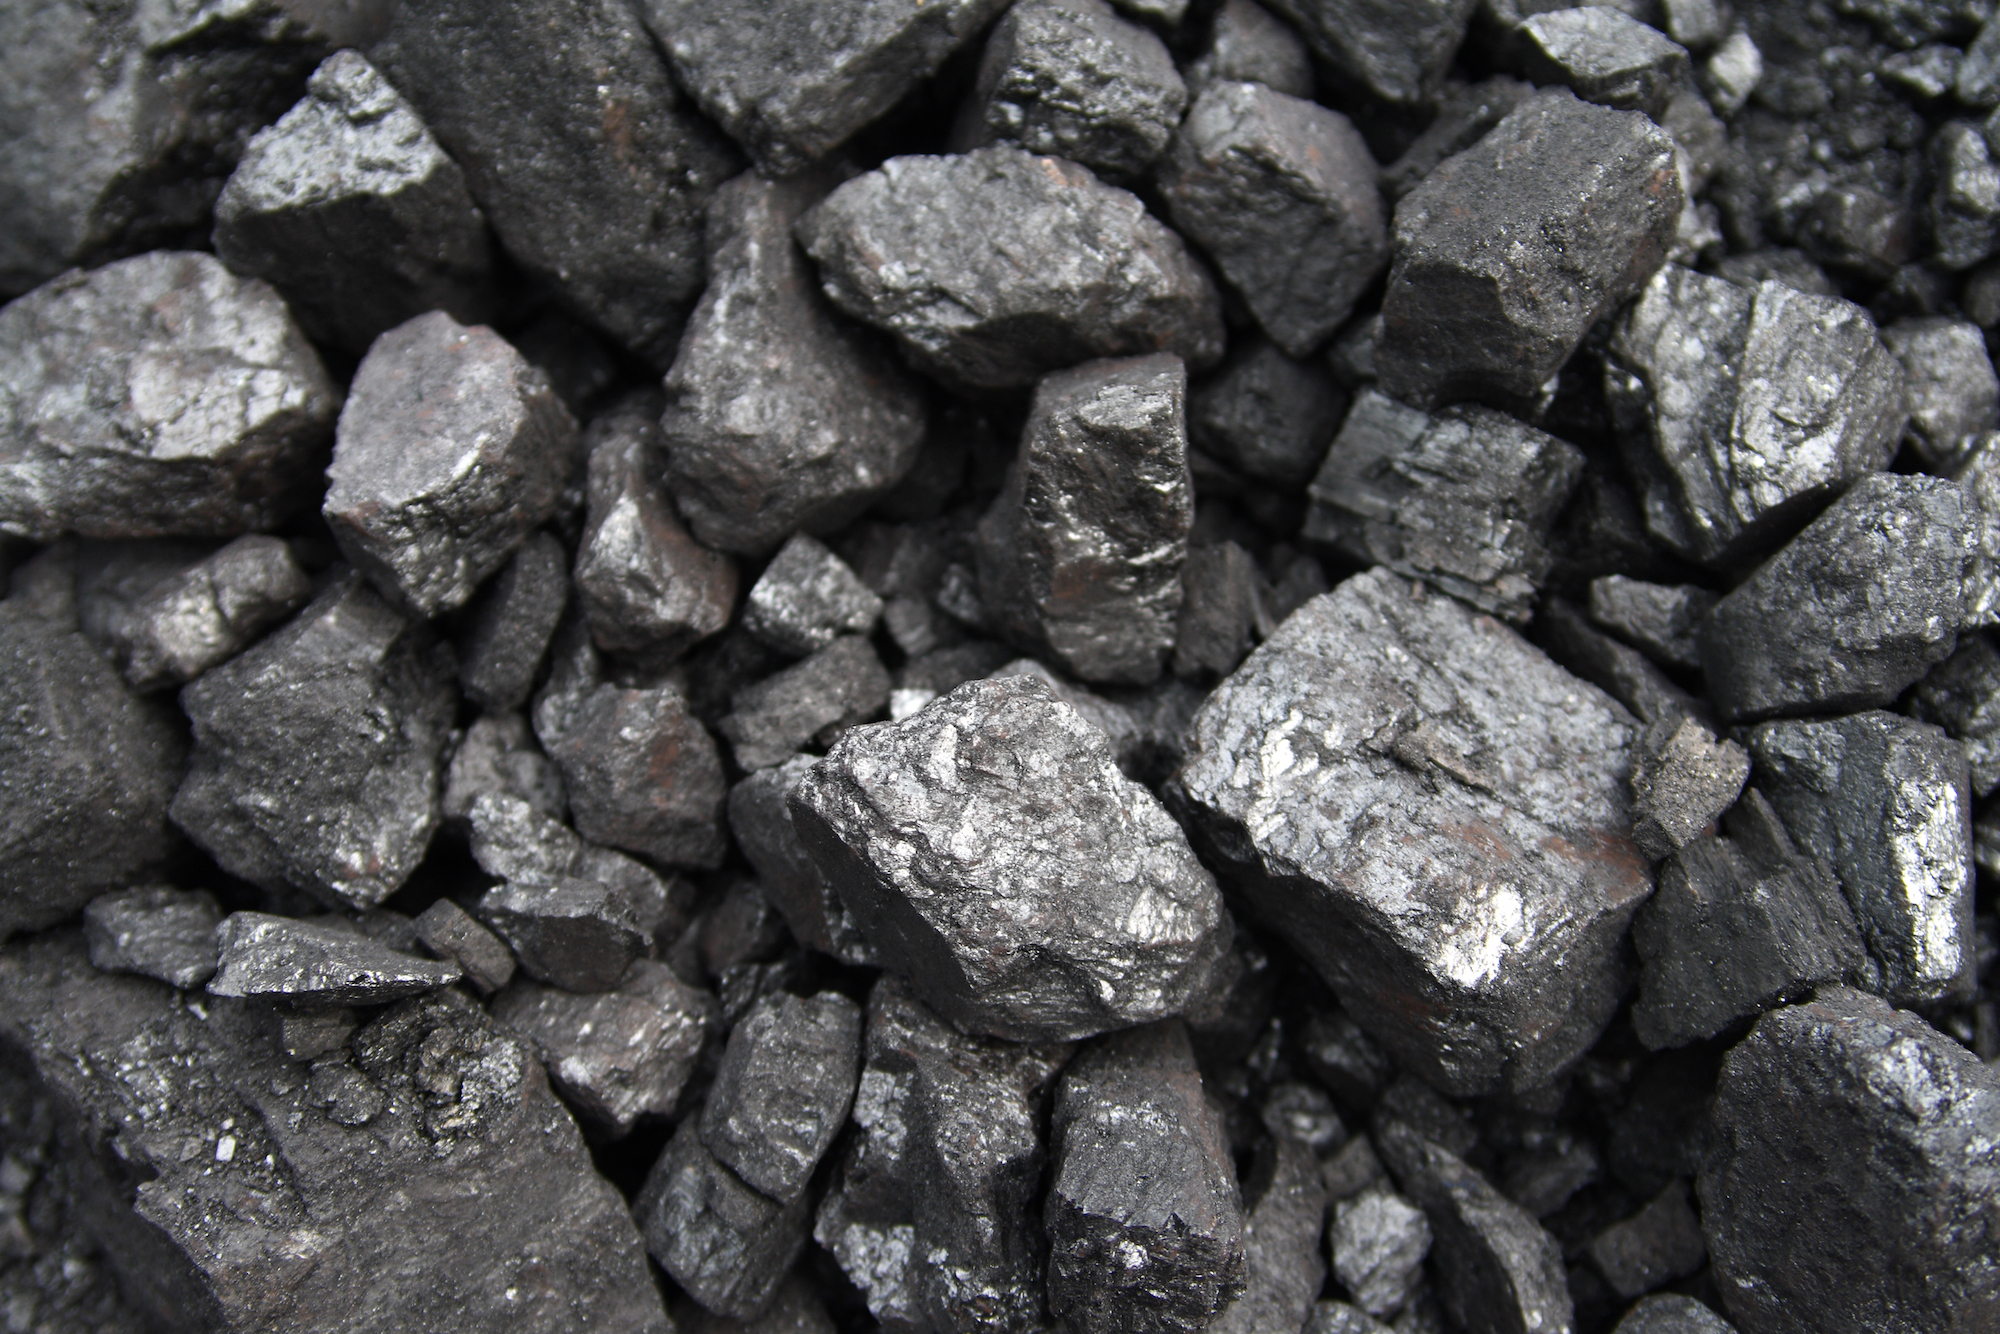 Banner Tee Coal